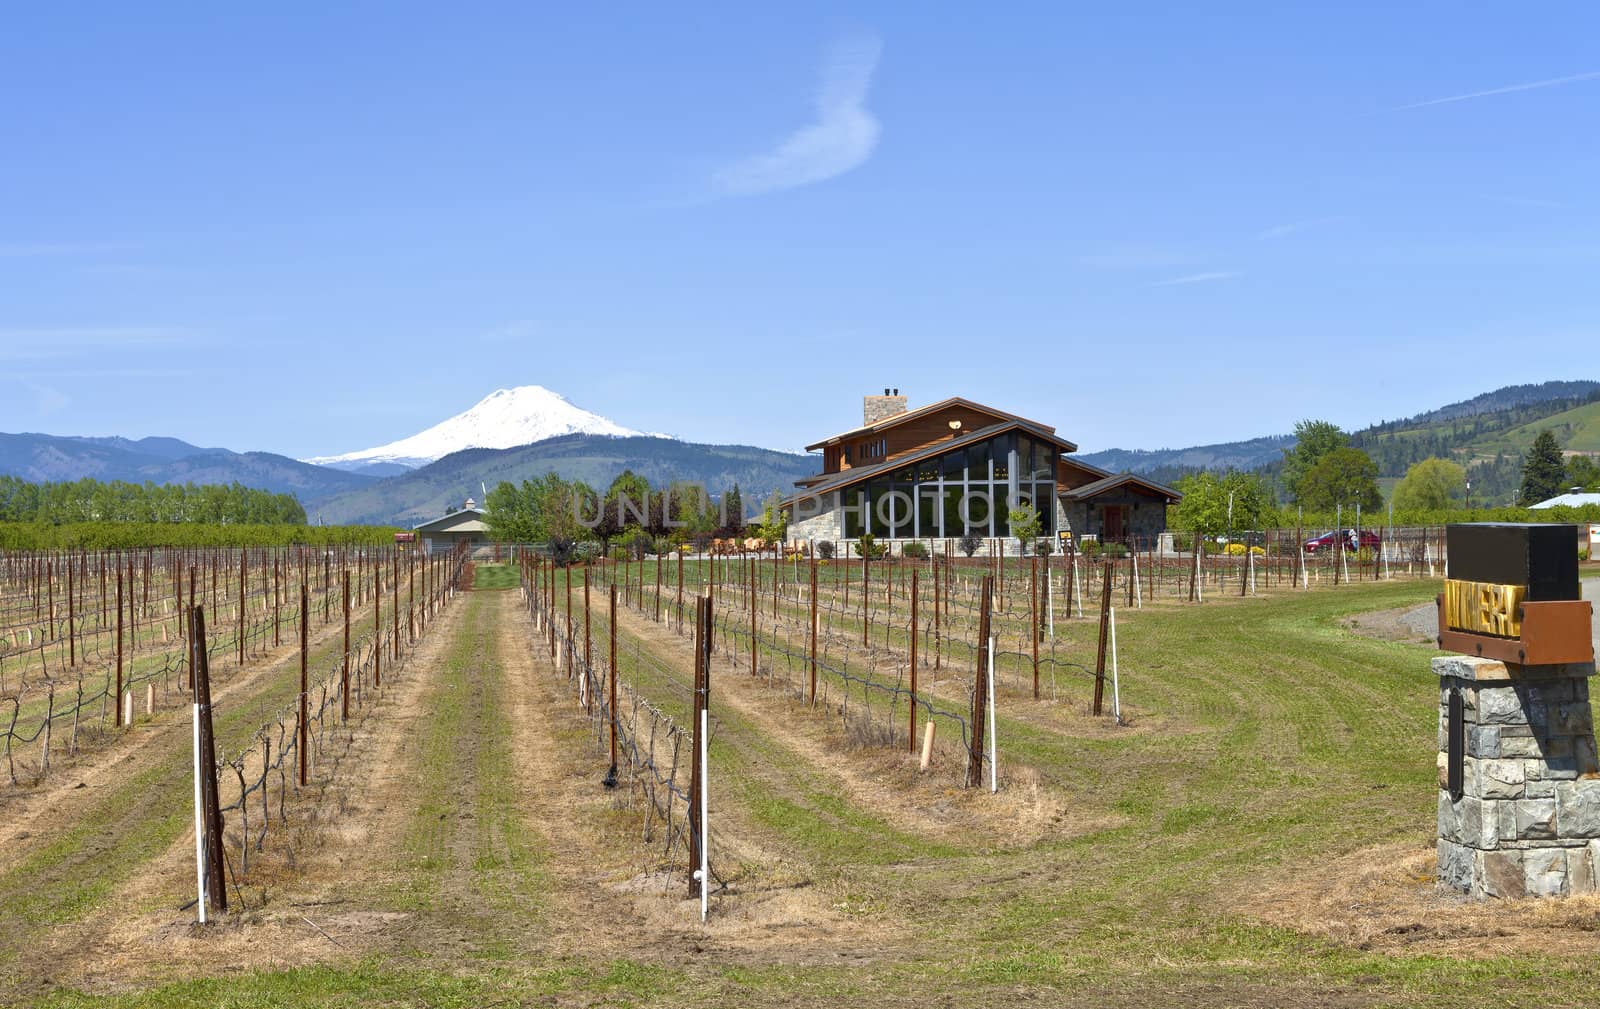 Mt Hood winery in Hood River valley Oregon.